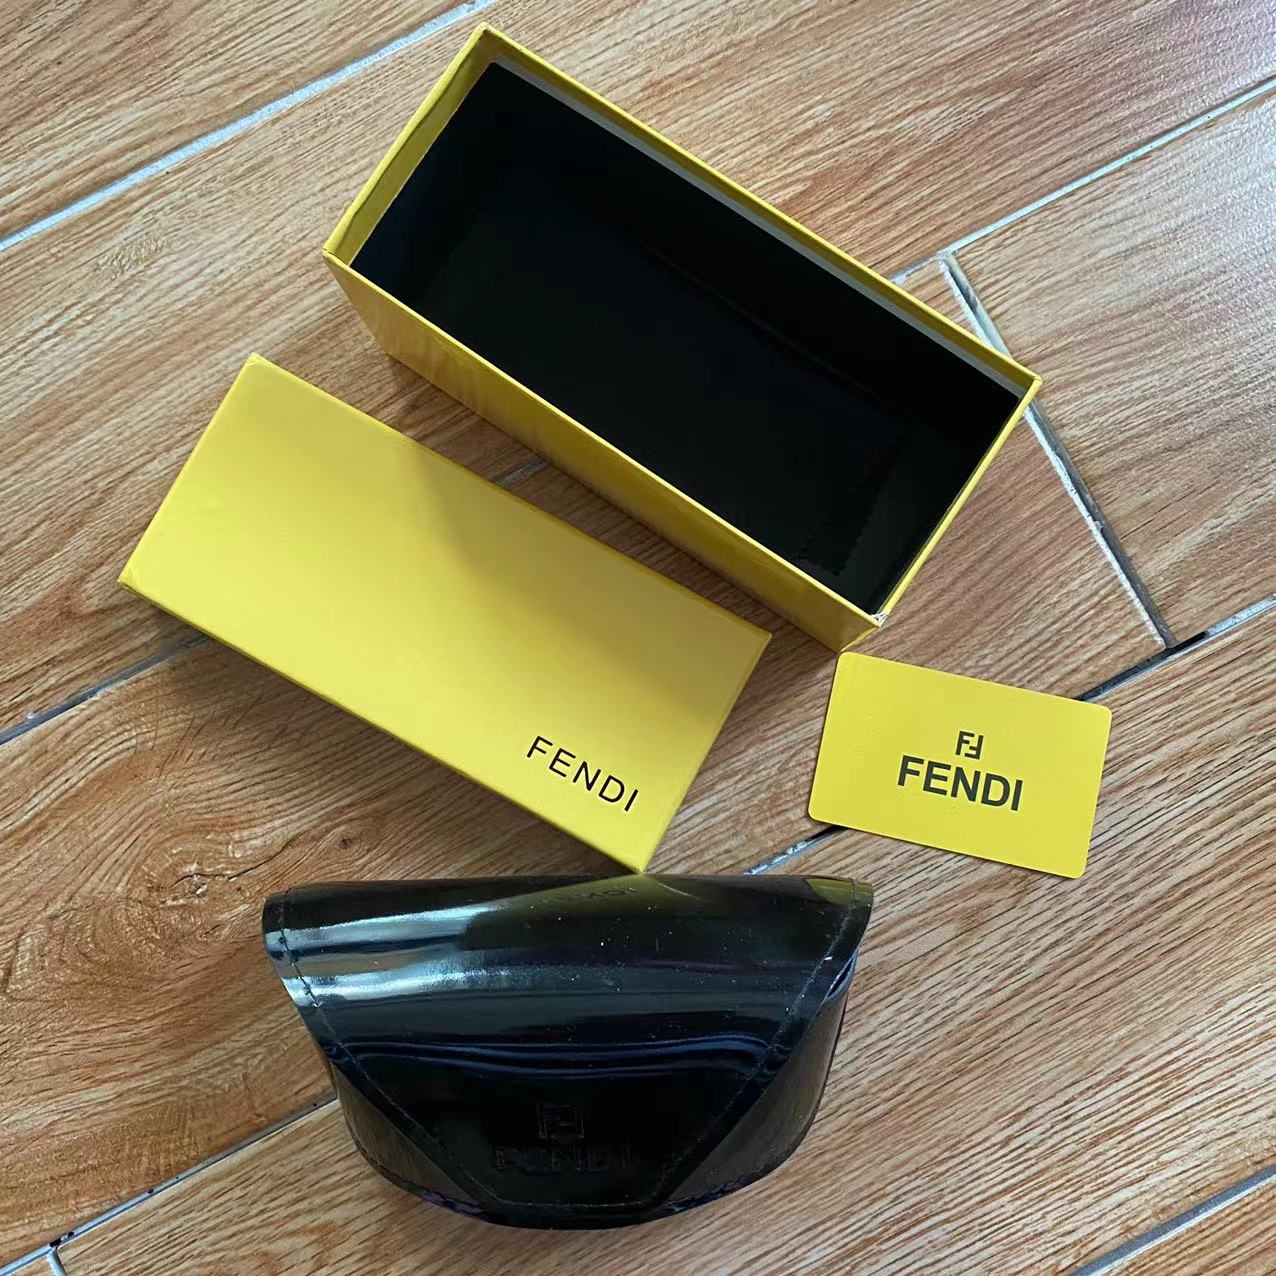 Fendi sunglasses package Box 1 set